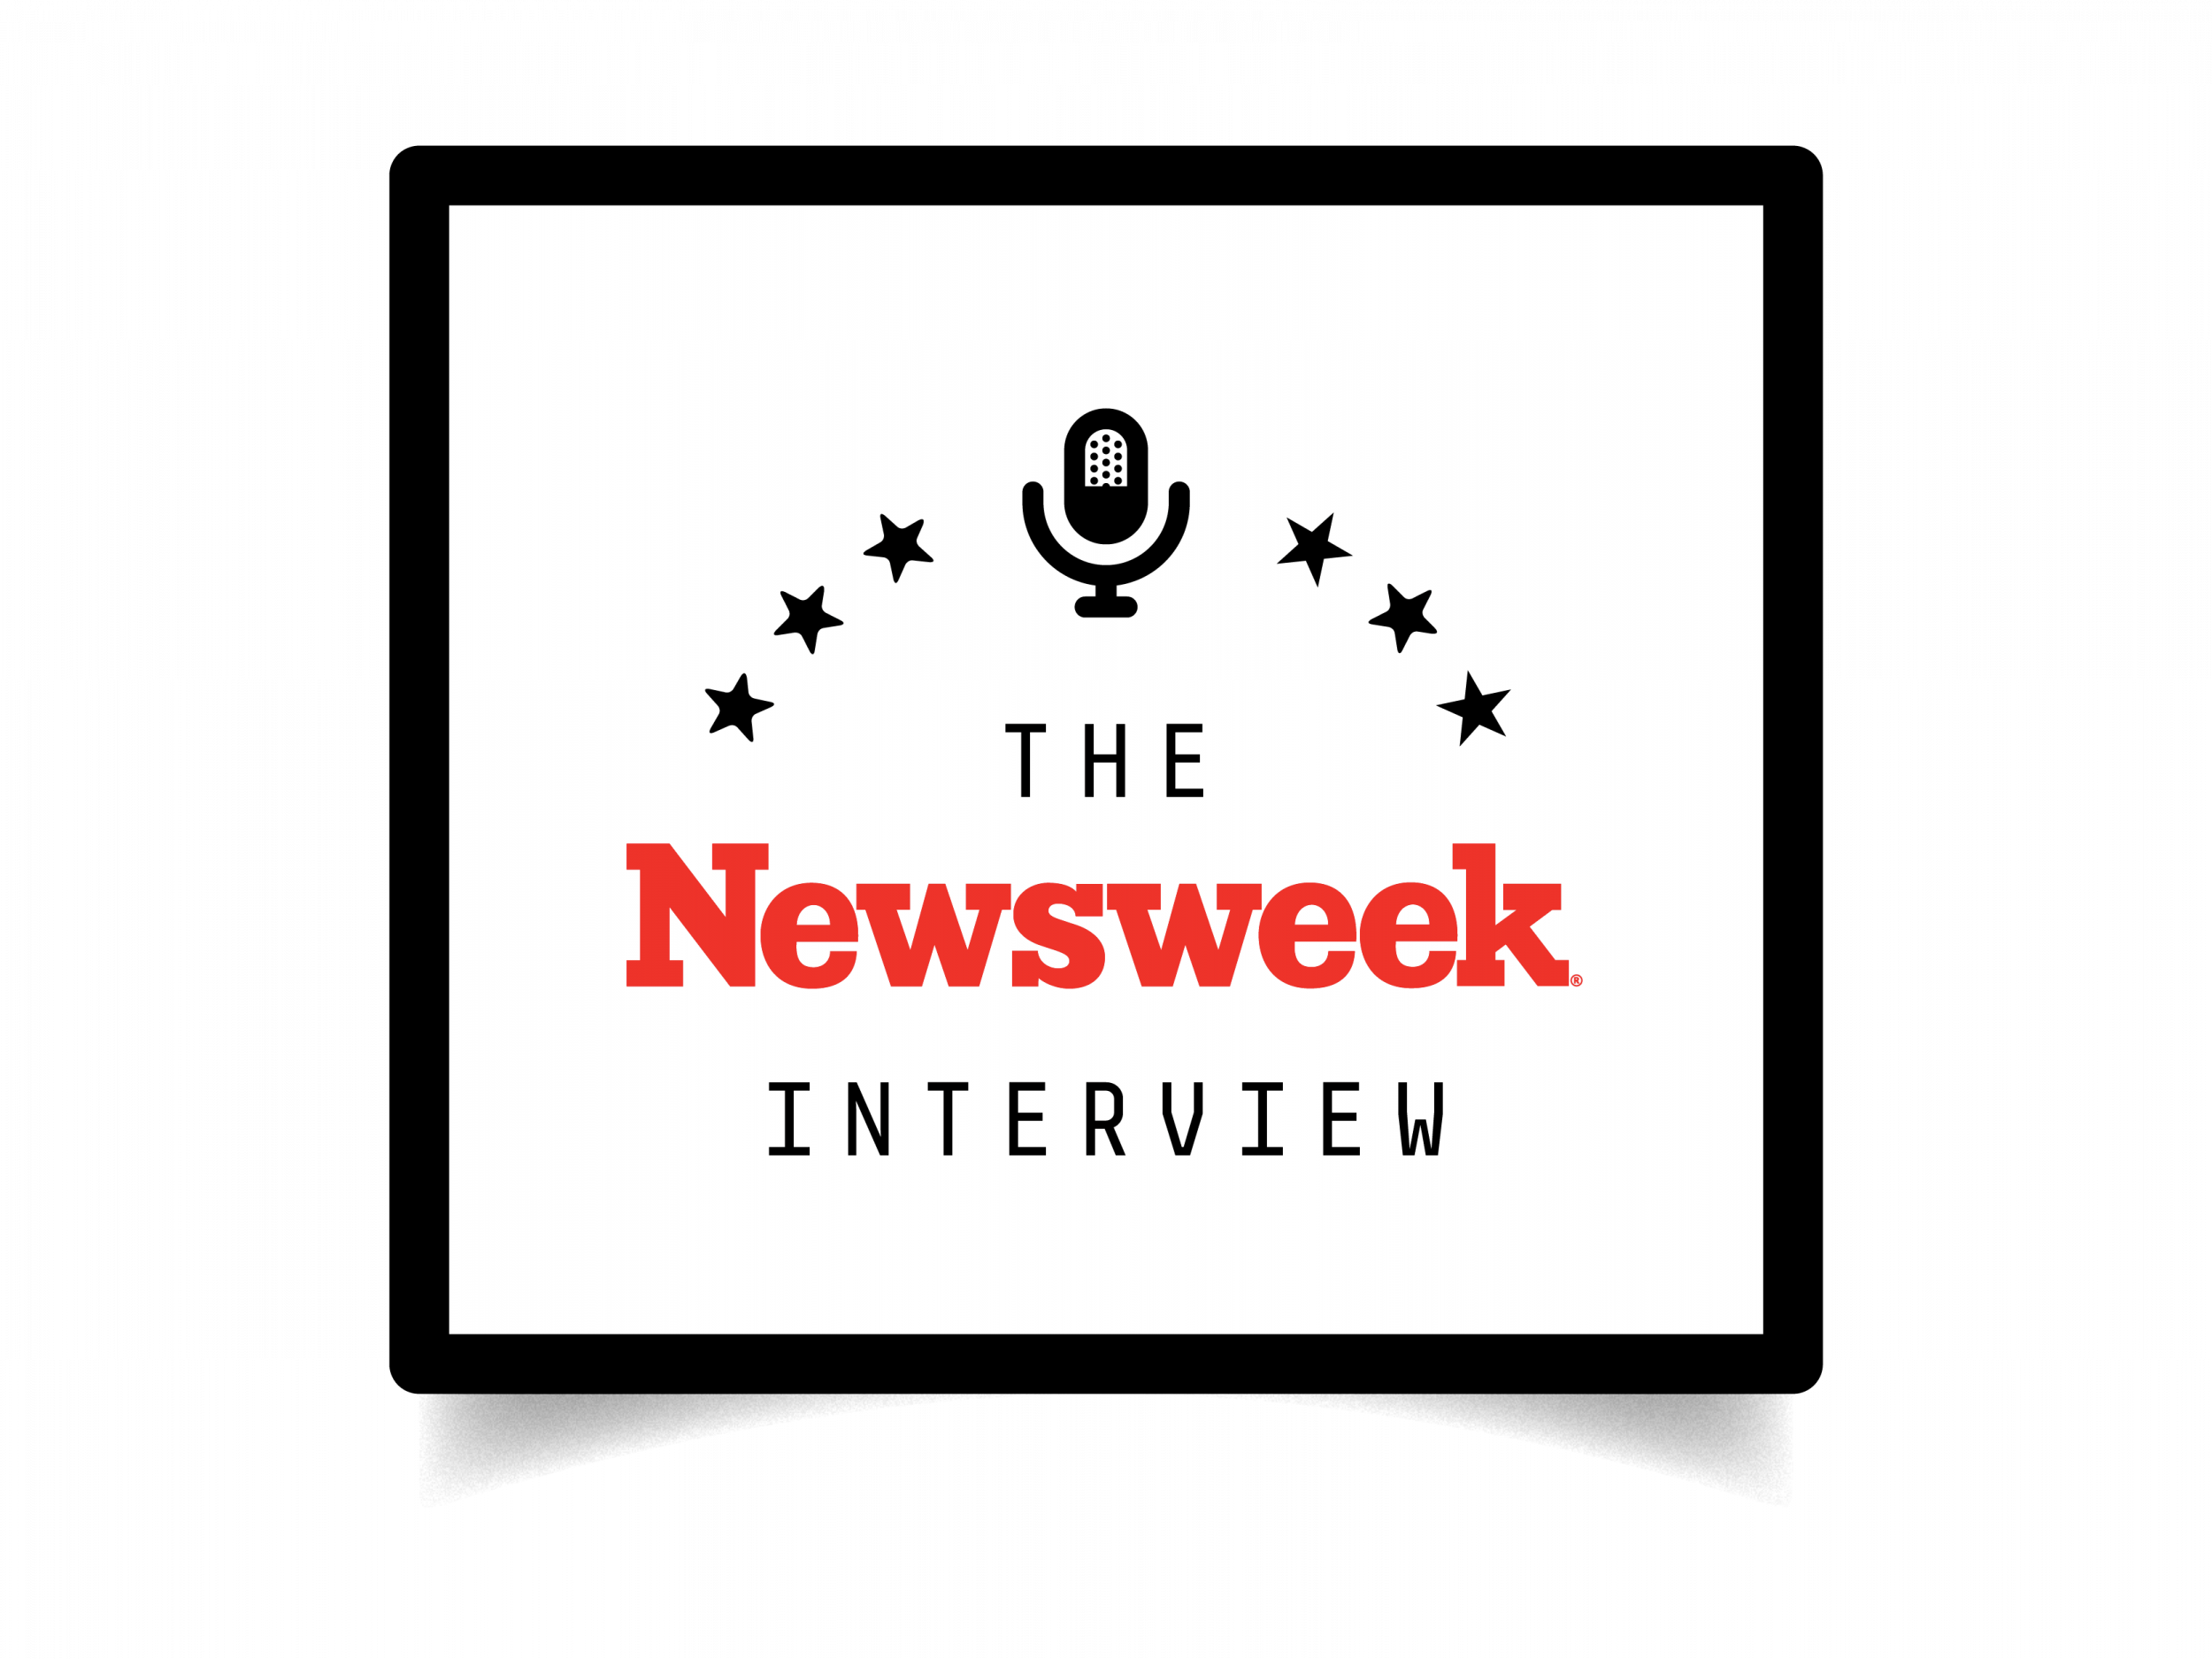 Newsweek, interview, badge